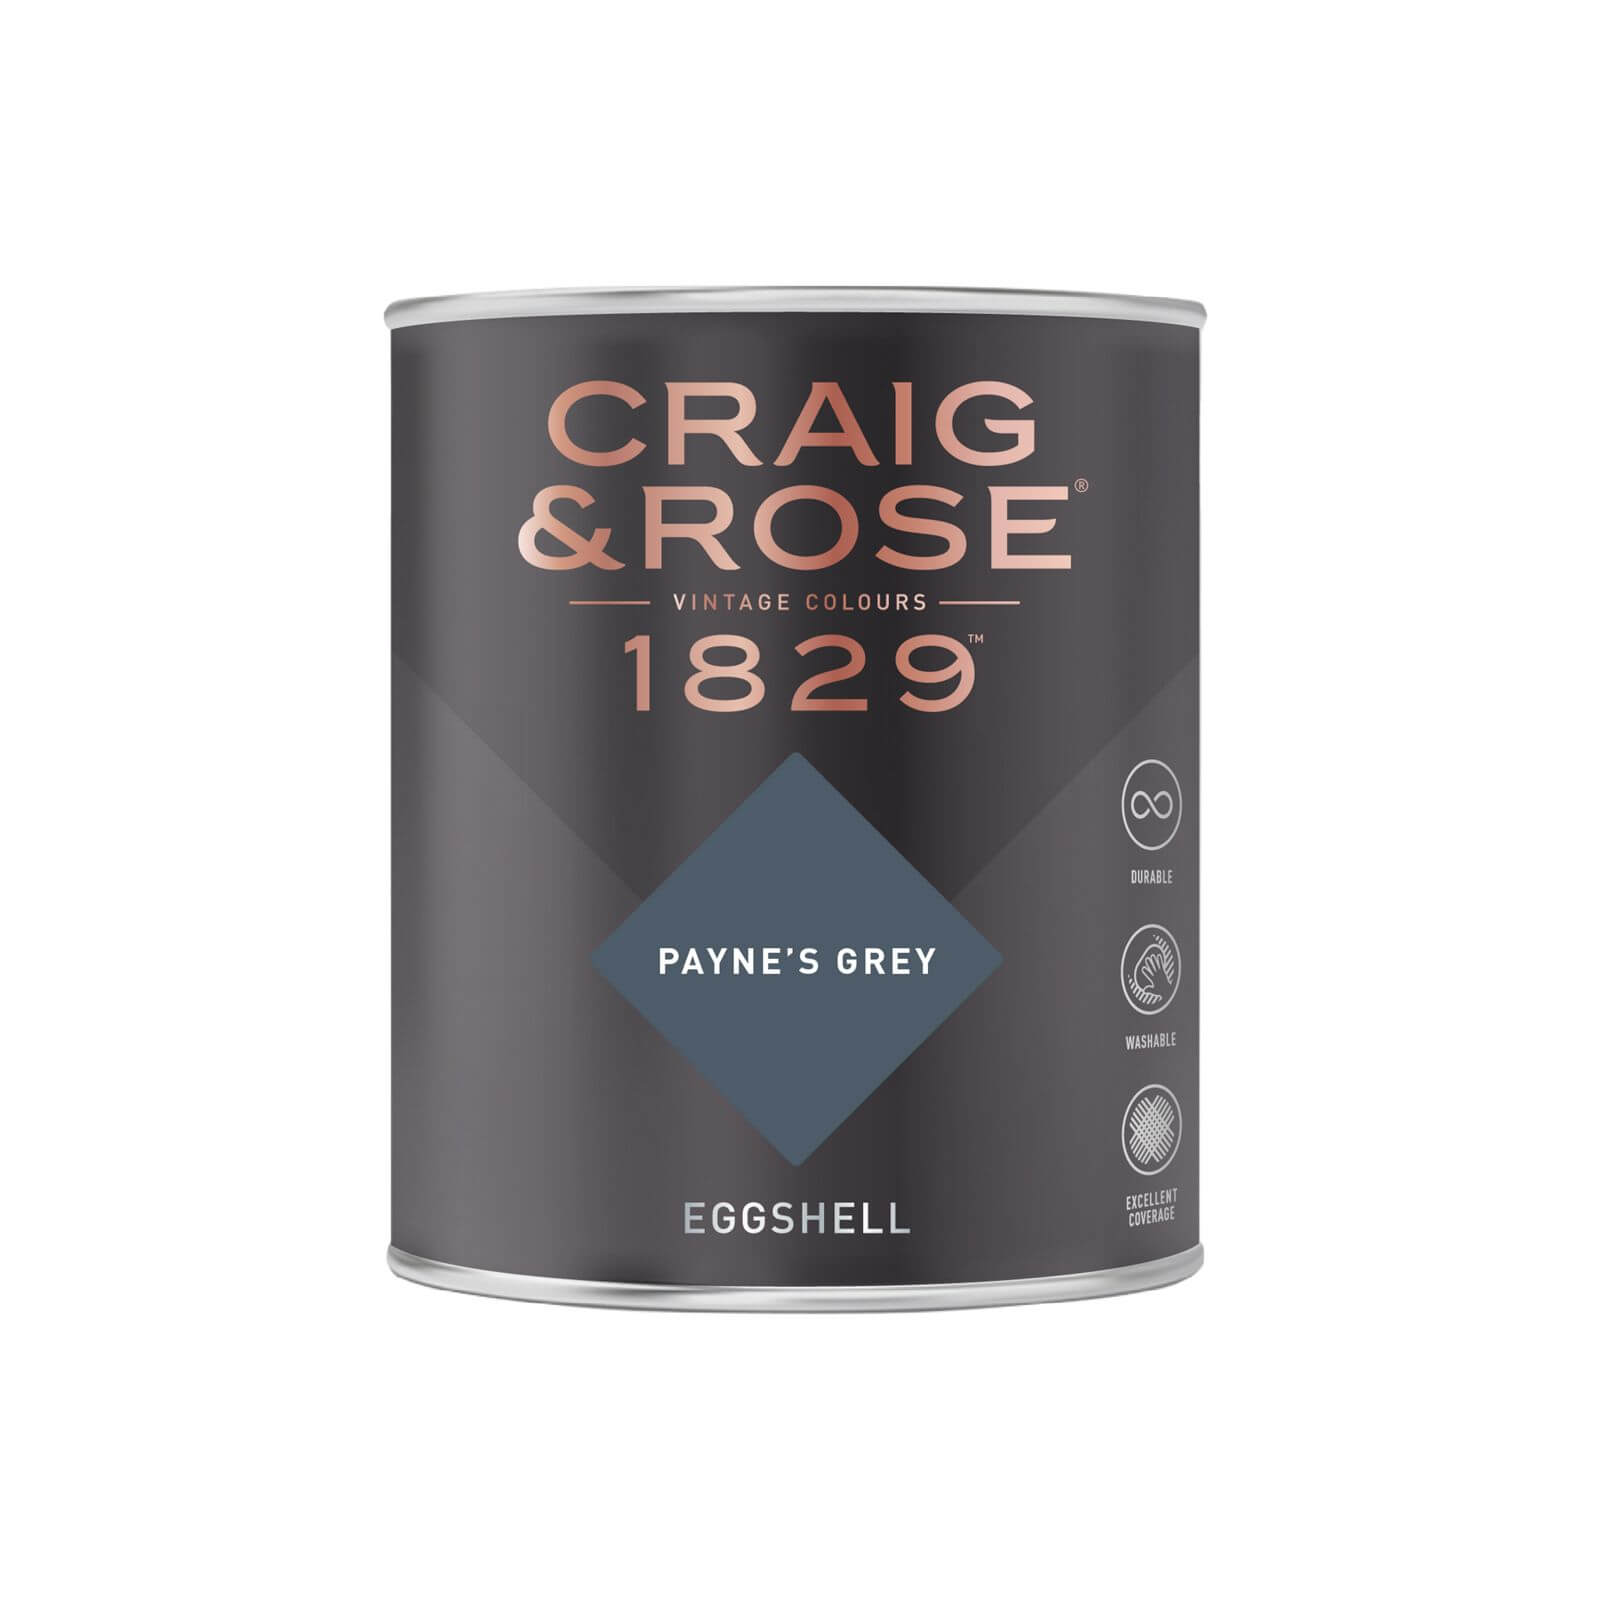 Craig & Rose 1829 Eggshell Paint Paynes Grey - 750ml